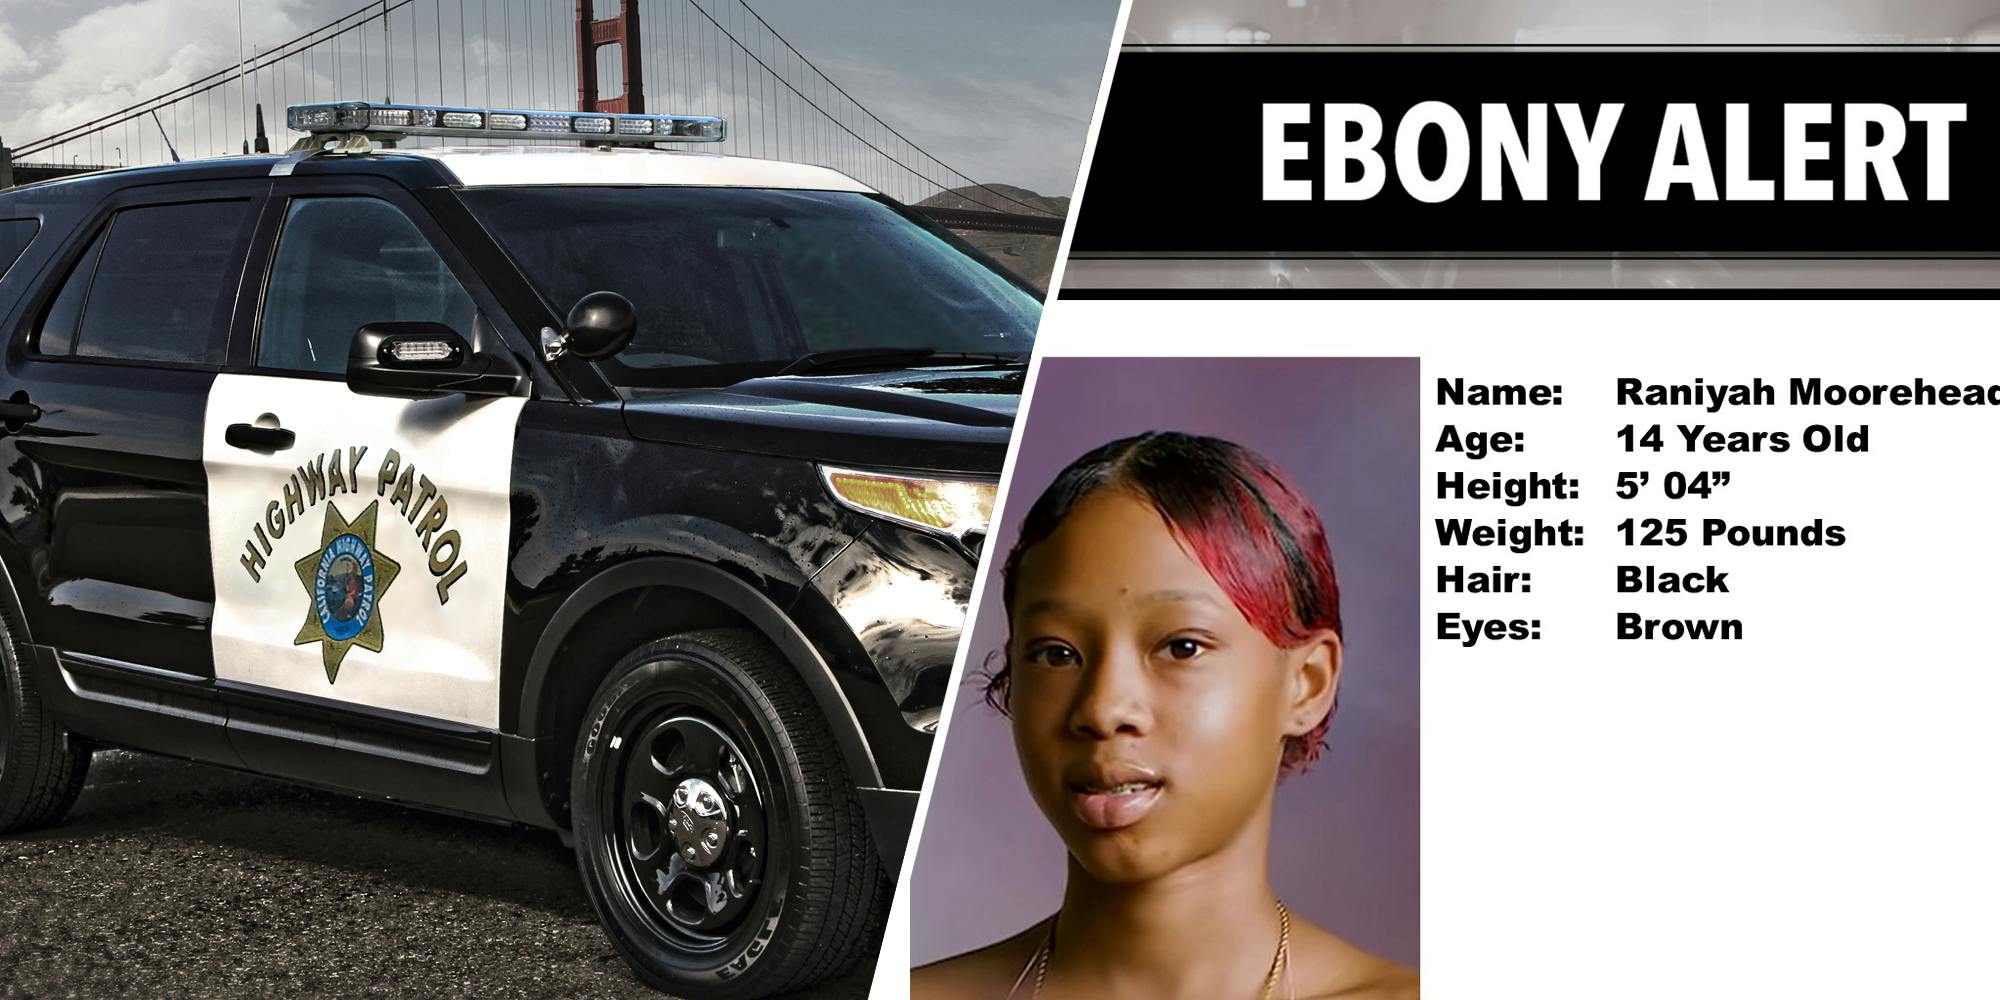 CHP vehicle(l), Ebony Alert(r)